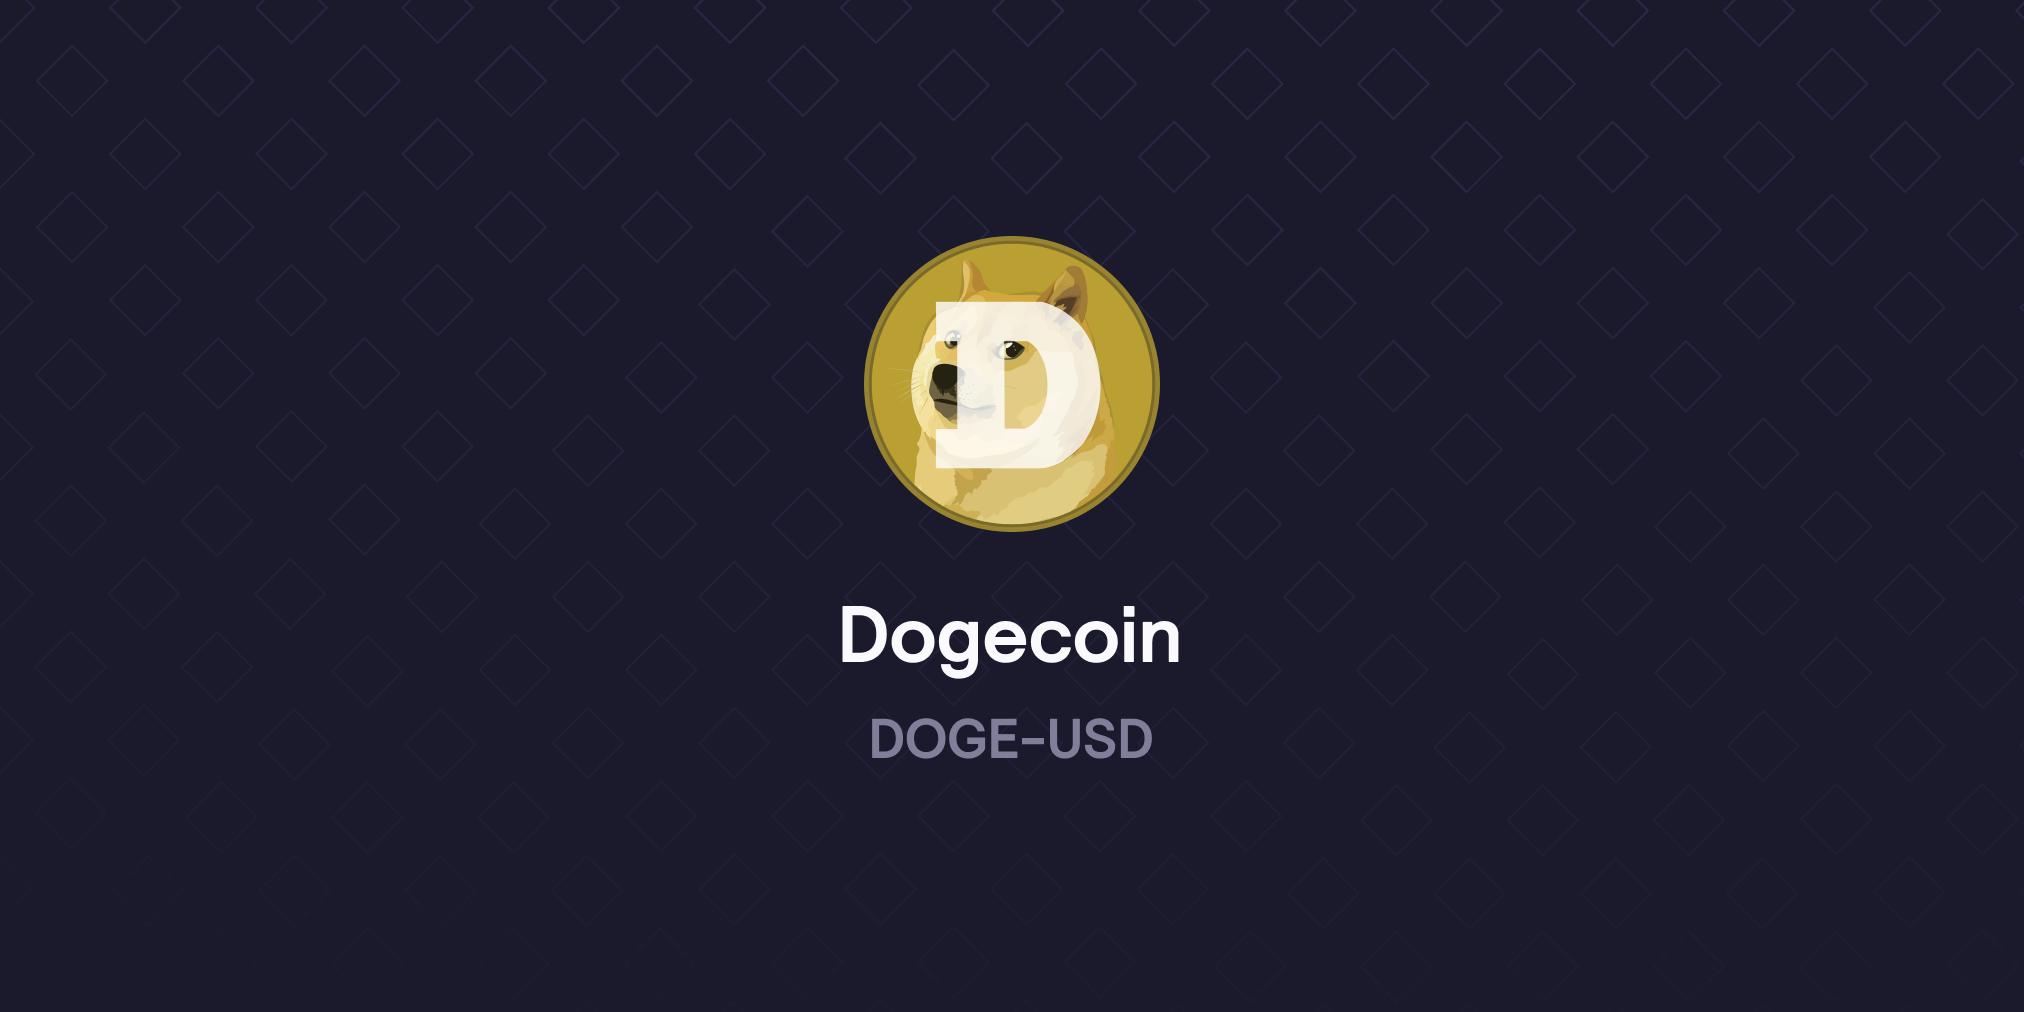 DOGE now live